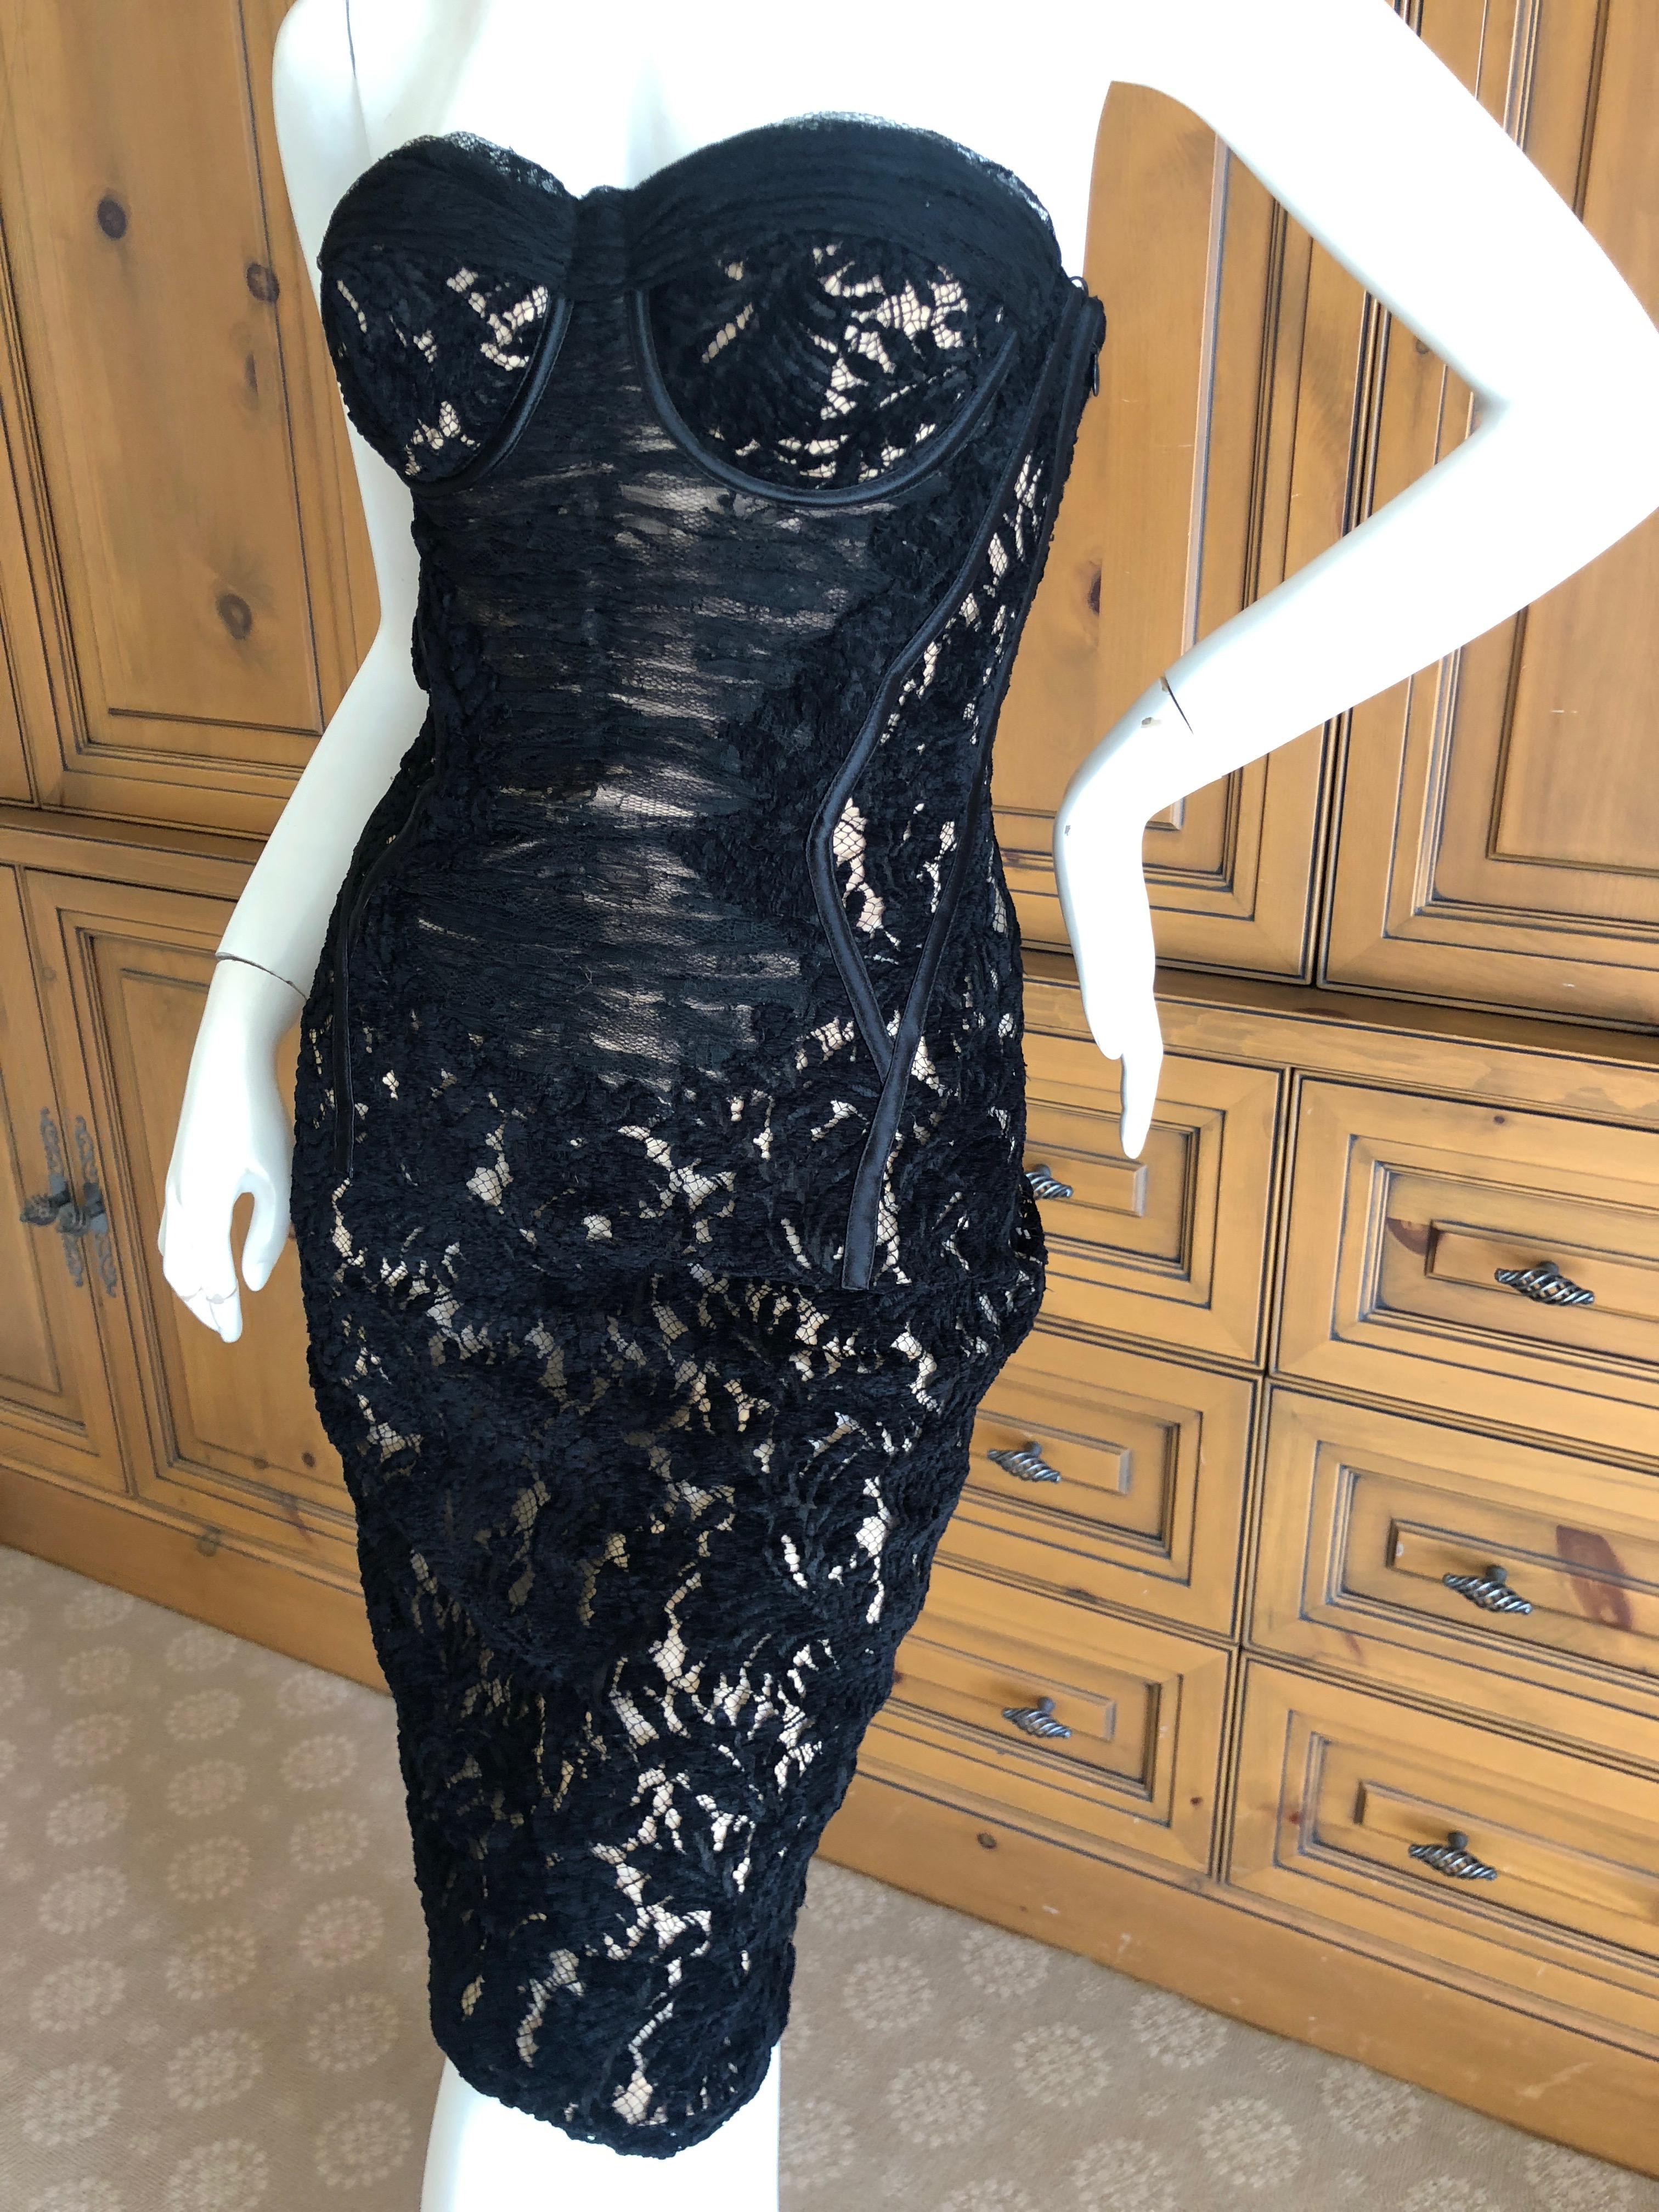 Gianni Versace Couture Vintage Black Devore Velvet Sheer Corseted Cocktail Dress For Sale 1